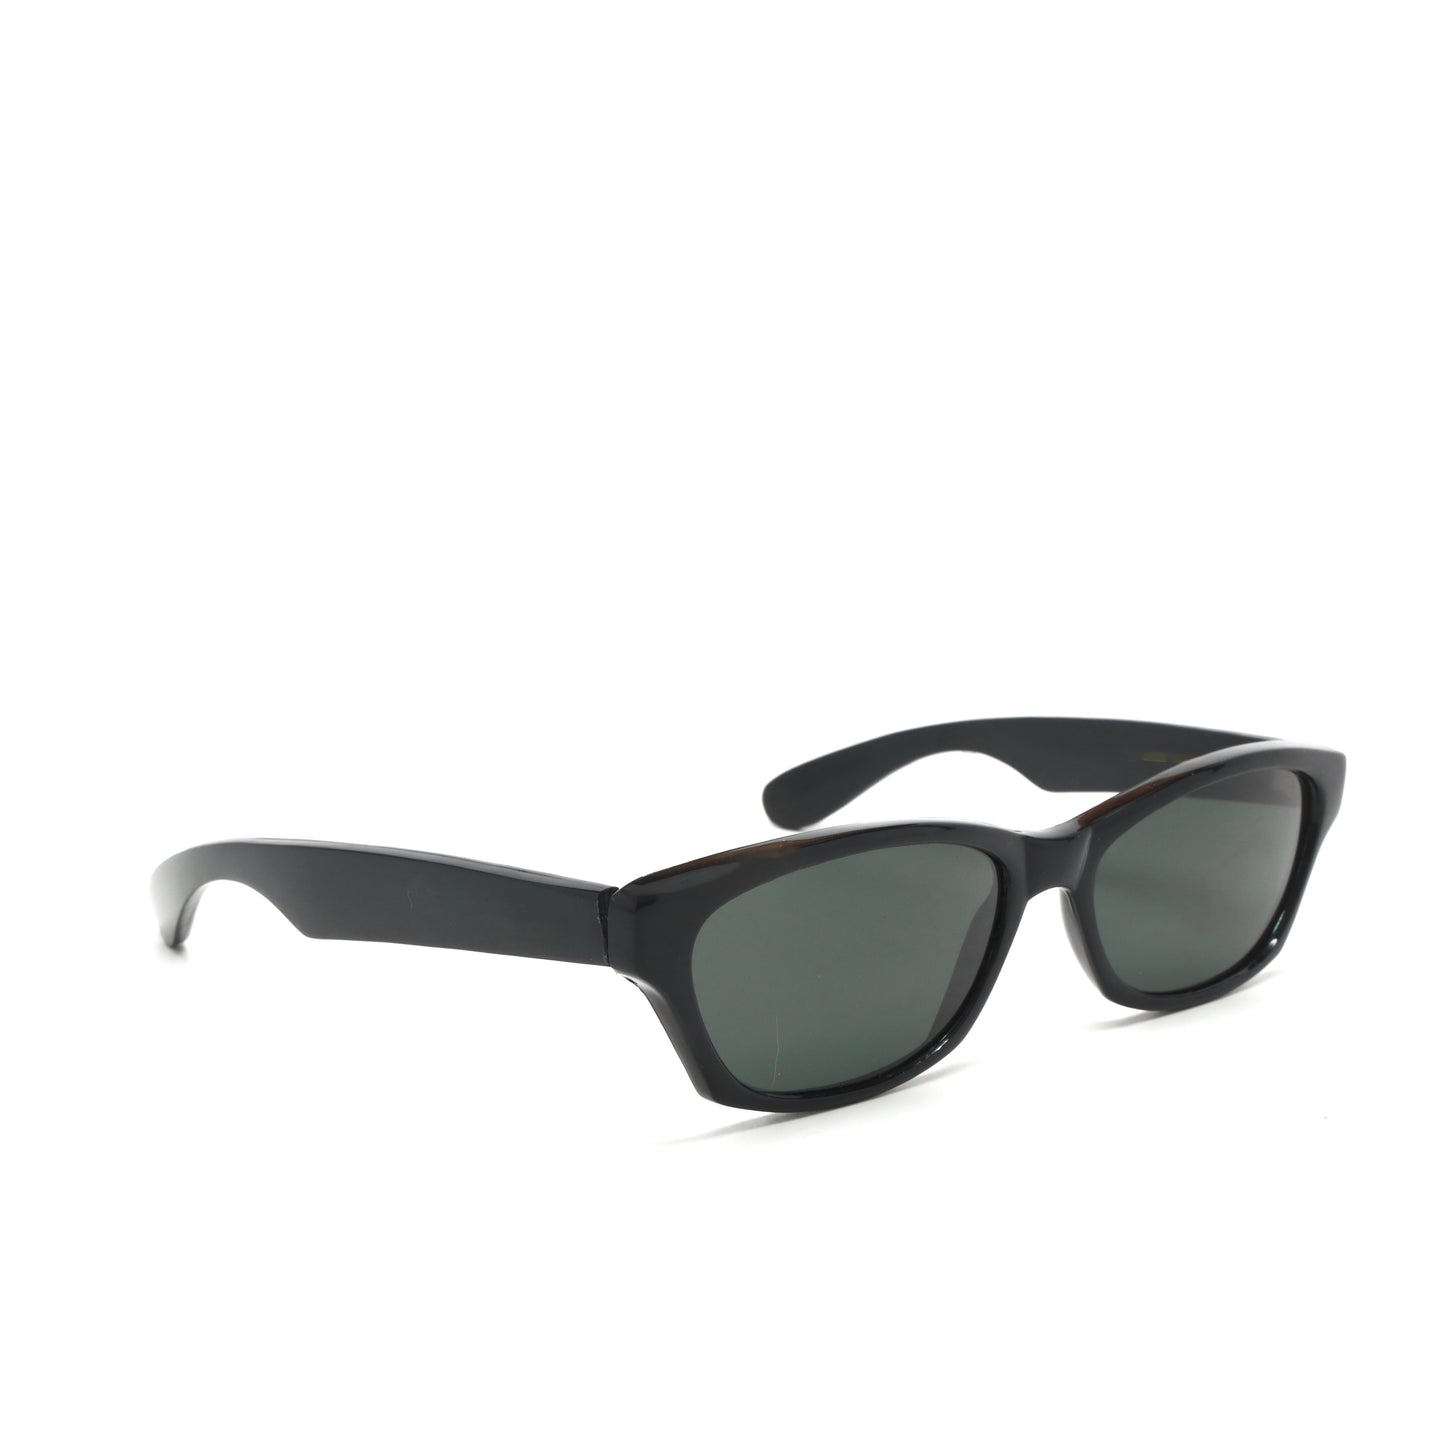 Deadstock Original Rectangular Wayfarer Frame Sunglasses - Black